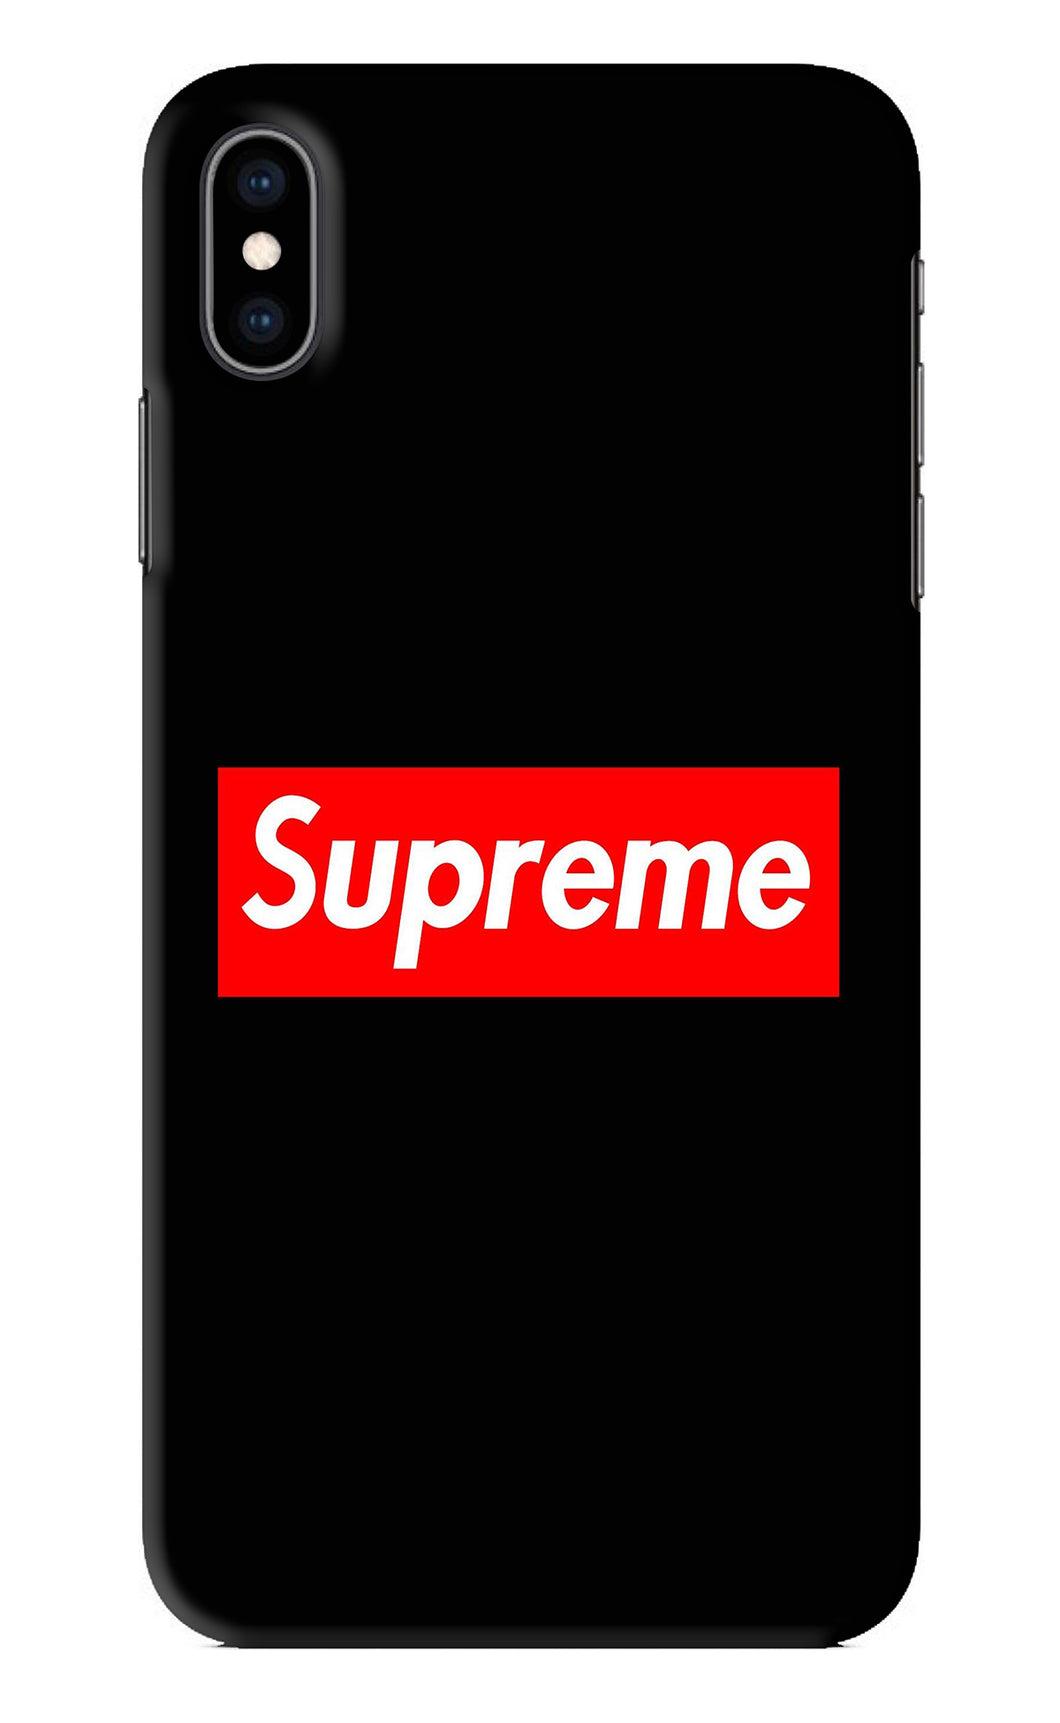 Supreme iPhone XS Max Back Skin Wrap